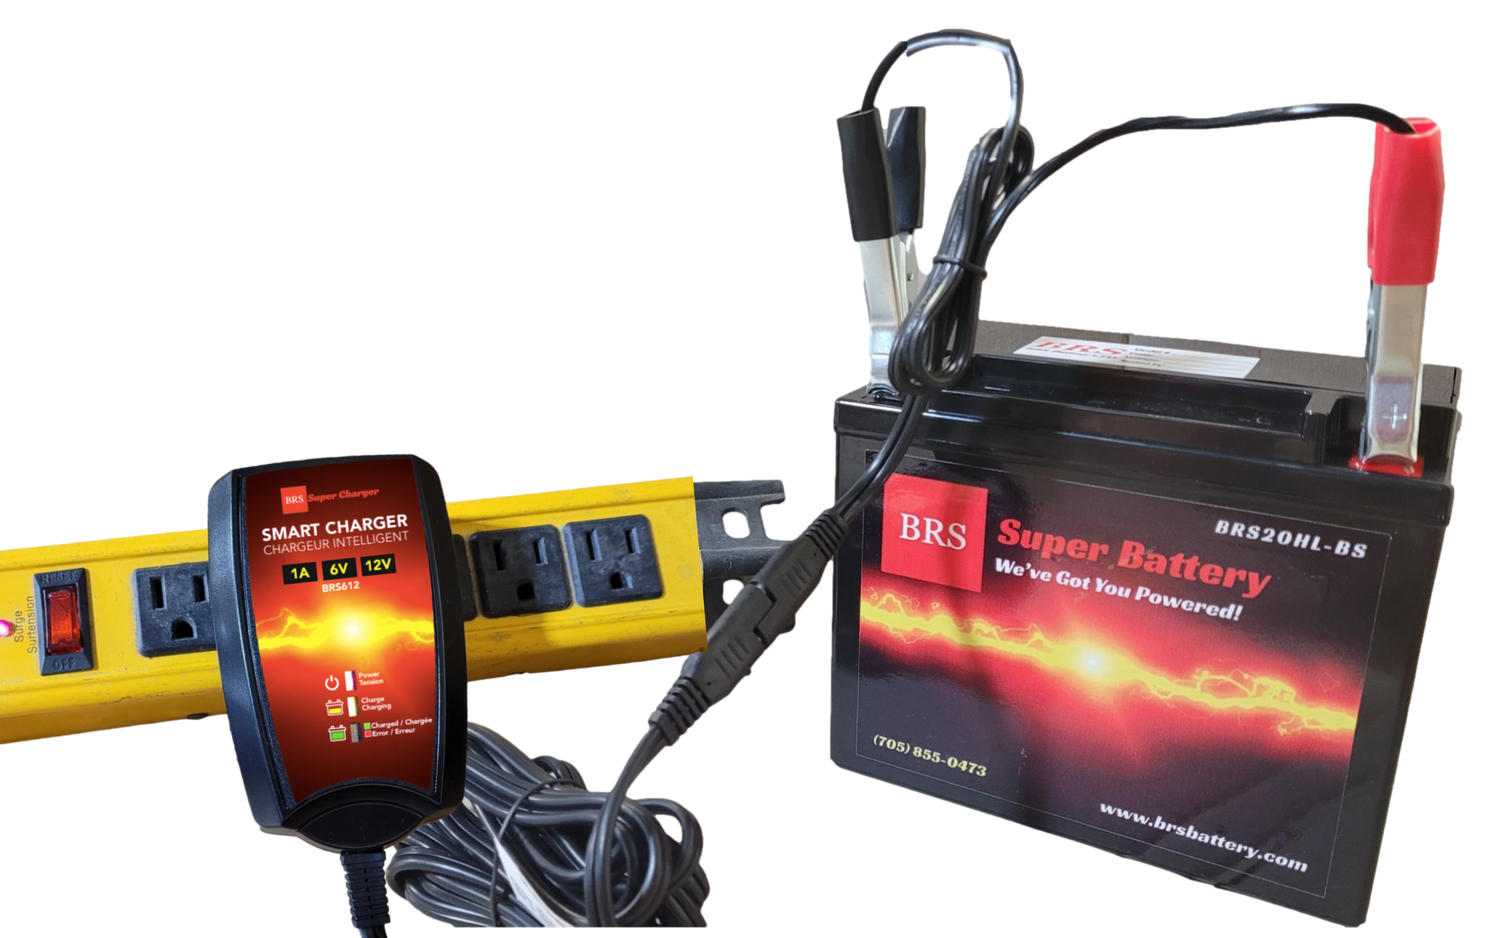 BRS24HL-BS 30 Day Warranty Battery & Smart Charger / Maintainer Combo Bundle Kit - BRS Super Battery